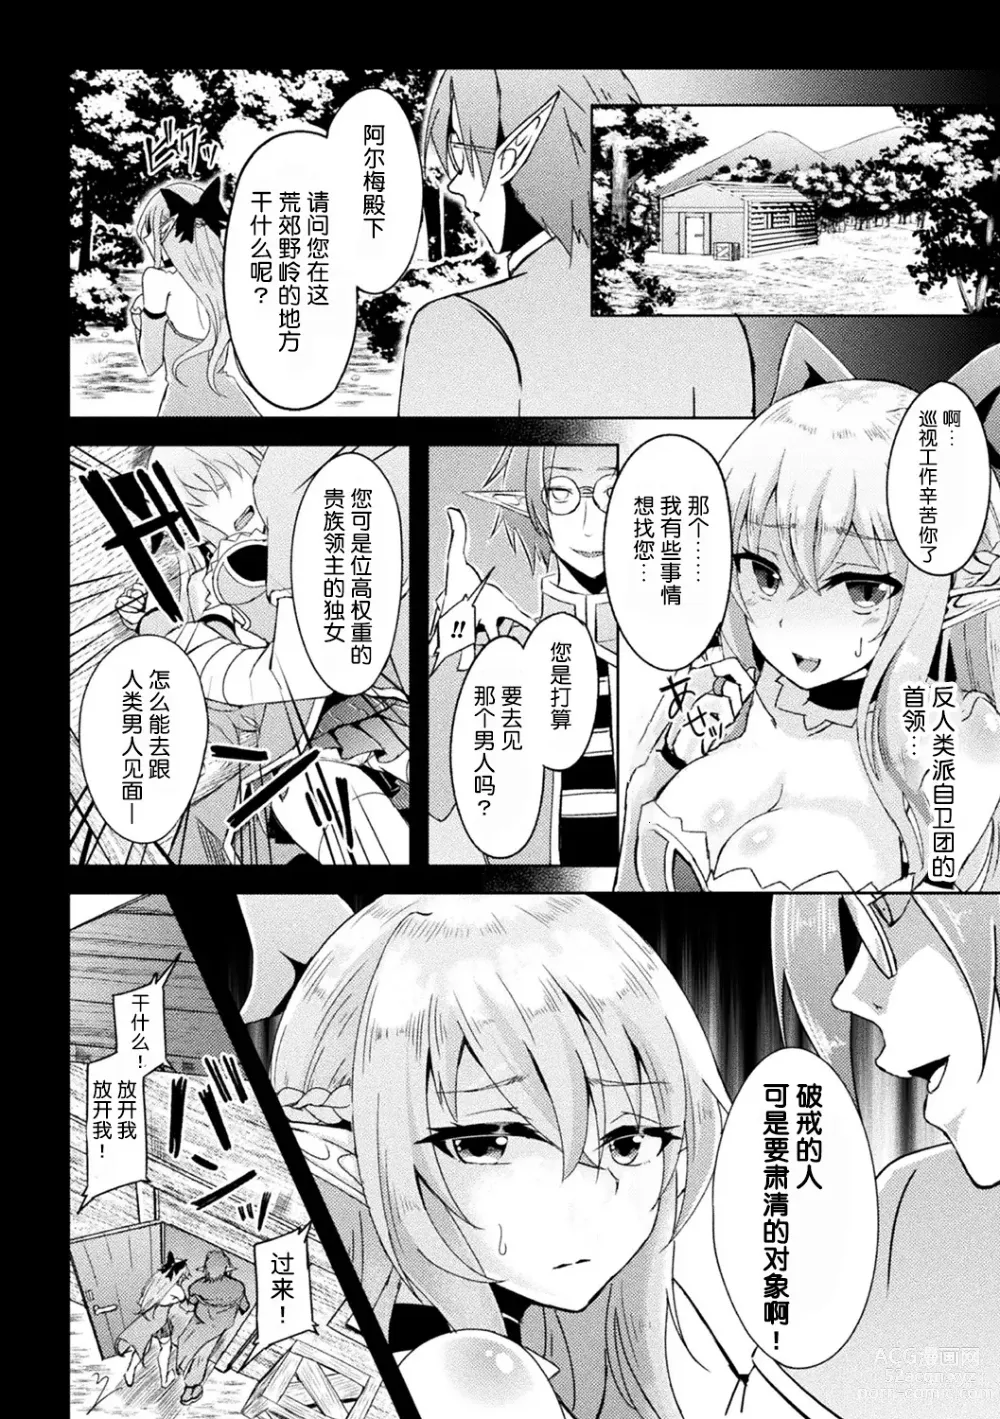 Page 2 of manga 精靈族良家公主殿下薬漬け公開陵辱